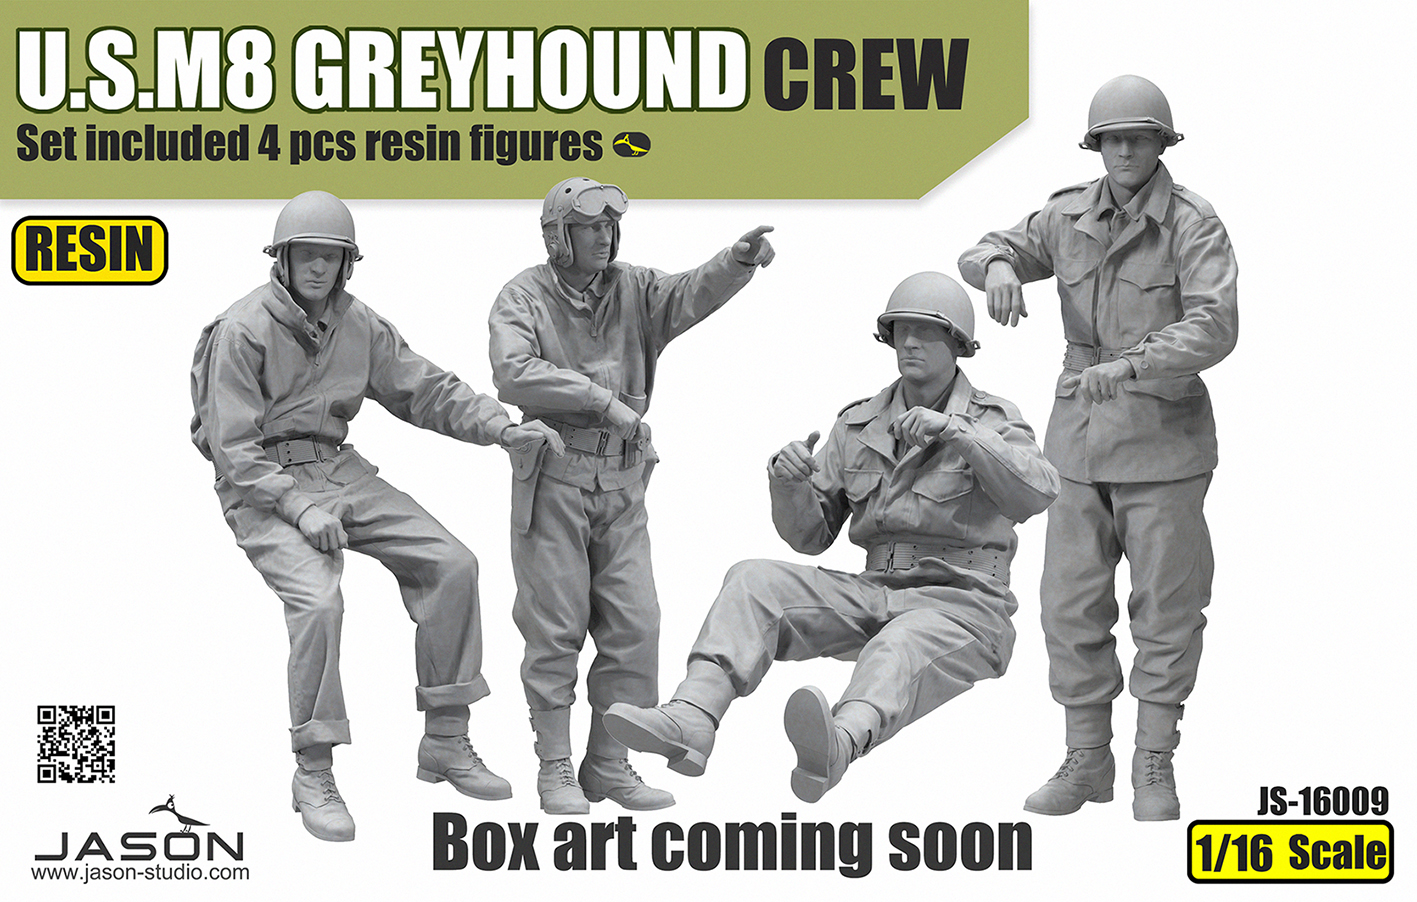 U.S. M8 Greyhound crew 1:16